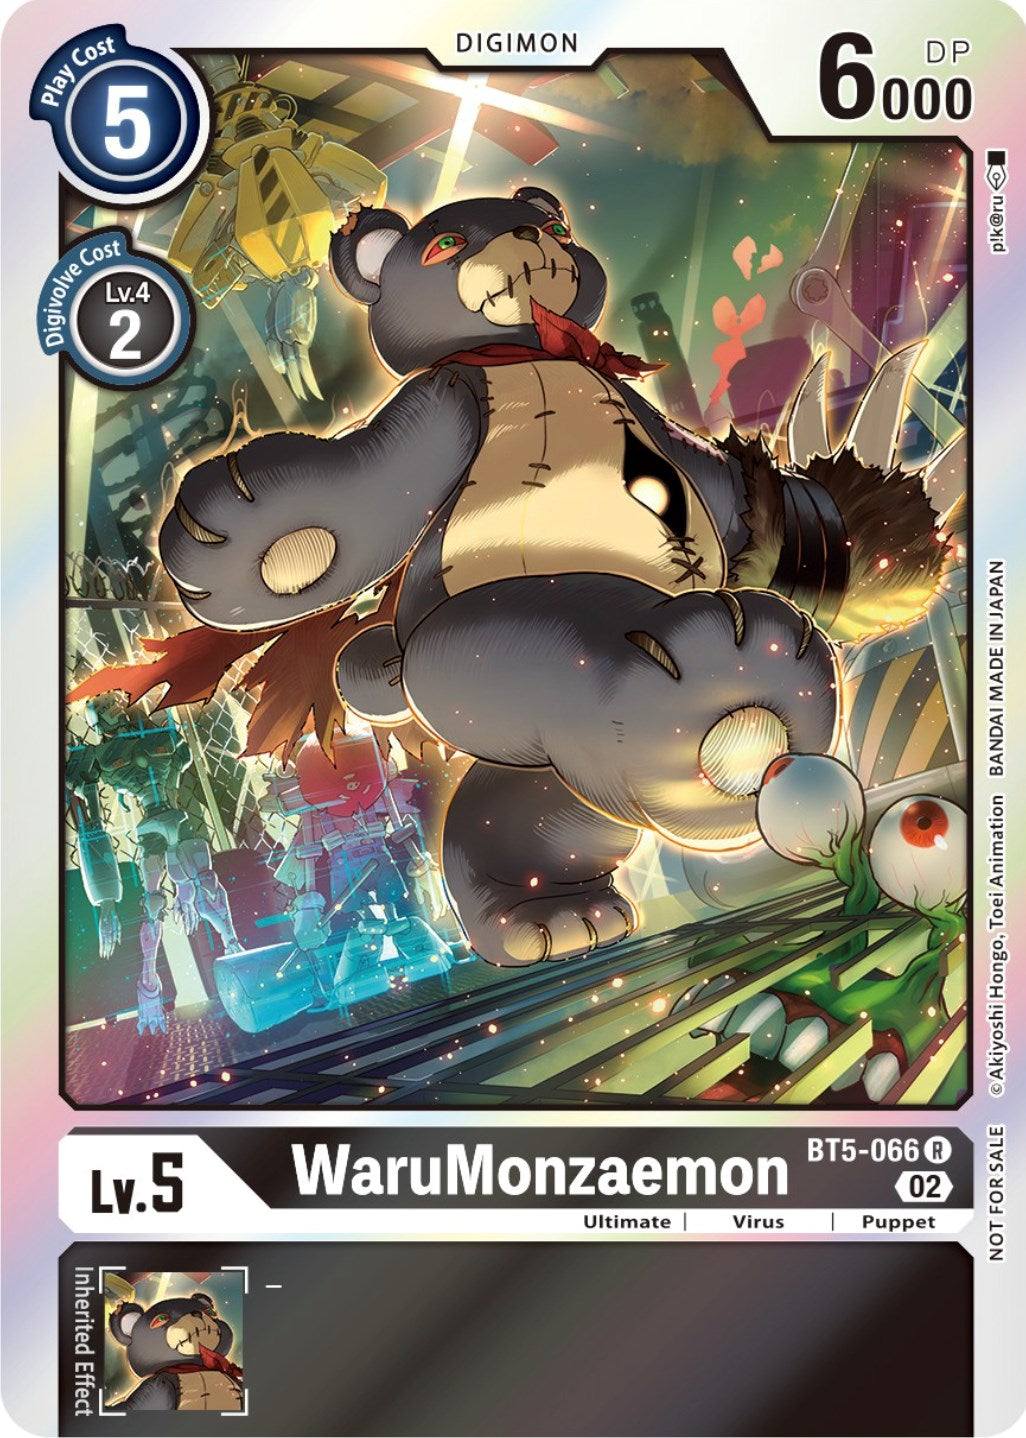 WaruMonzaemon [BT5-066] (Official Tournament Pack Vol. 7) [Battle of Omni Promos] | Arkham Games and Comics